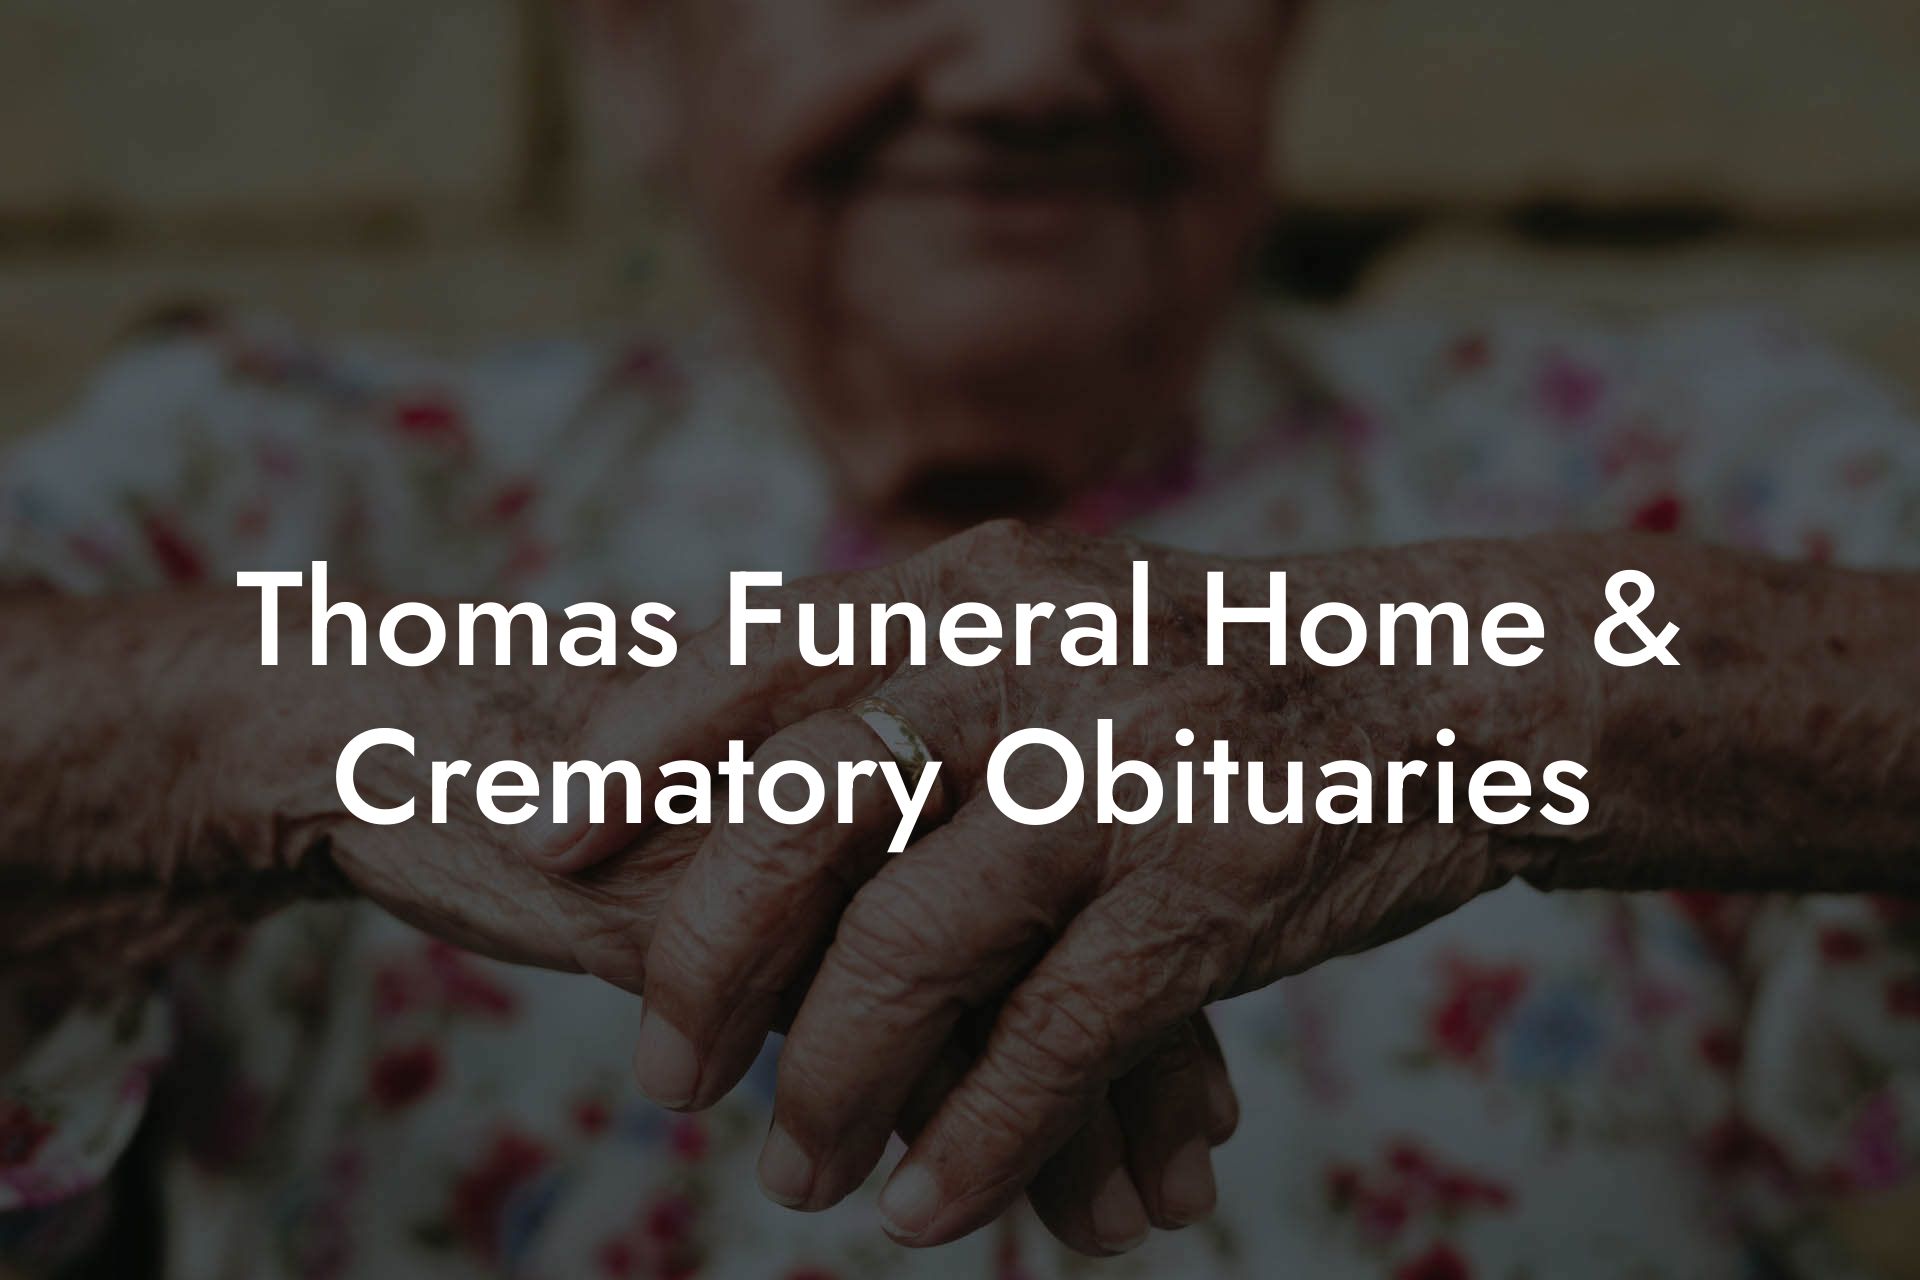 Thomas Funeral Home & Crematory Obituaries